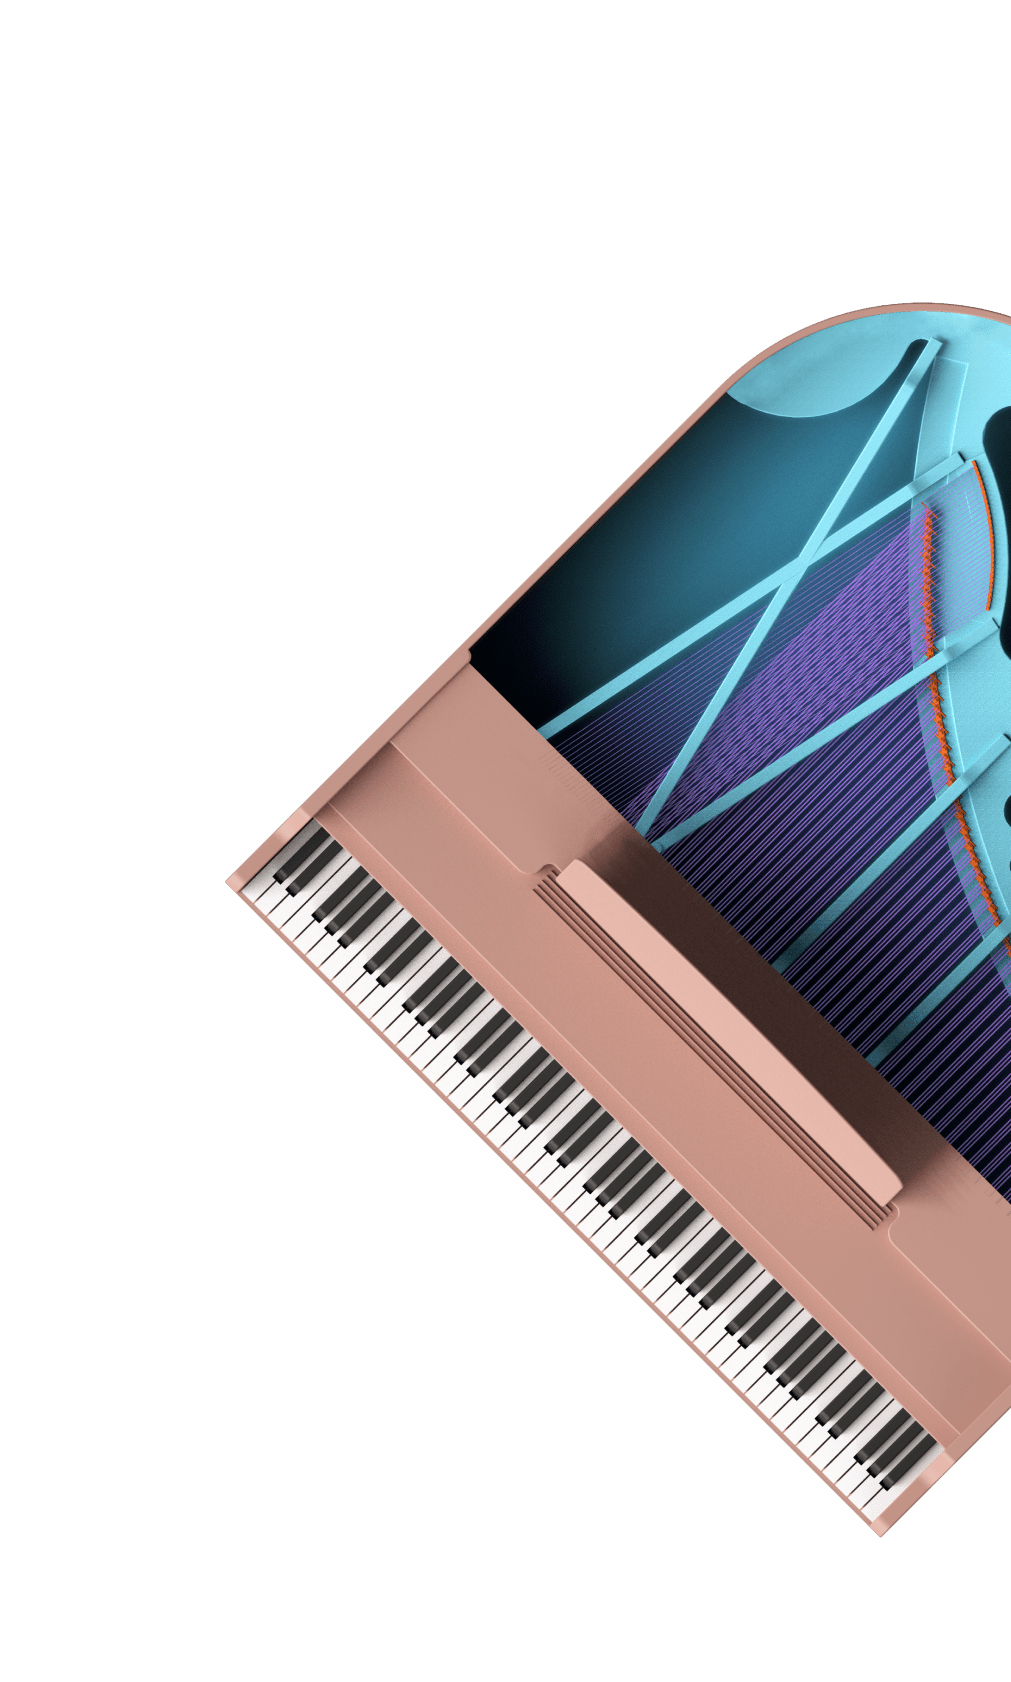 LUMI Keys: The worlds most advanced portable keyboard 